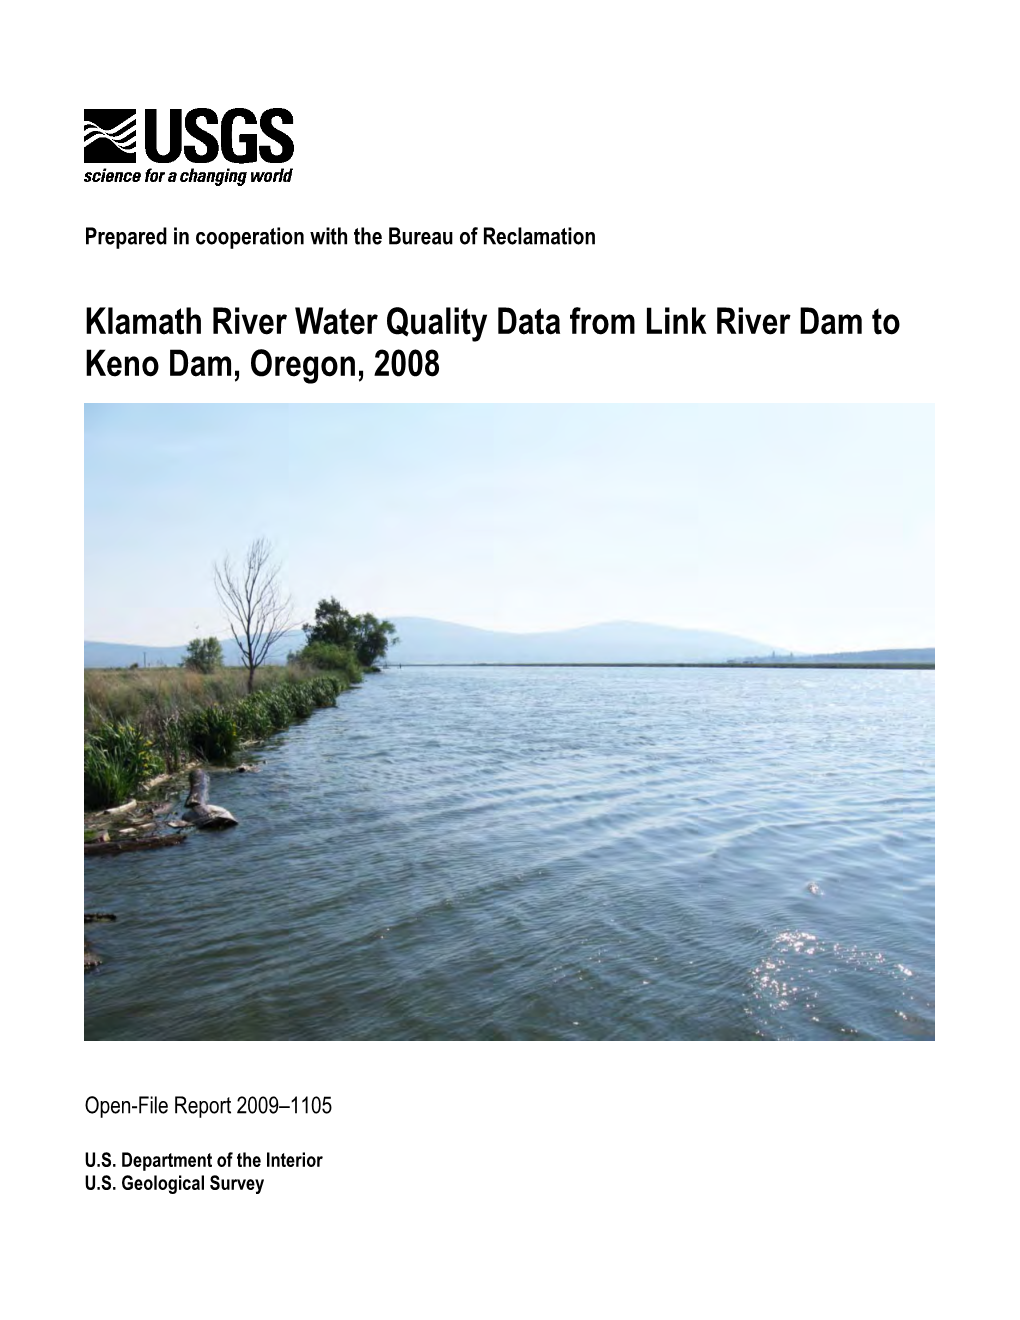 Klamath River Water Quality Data from Link River Dam to Keno Dam, Oregon, 2008